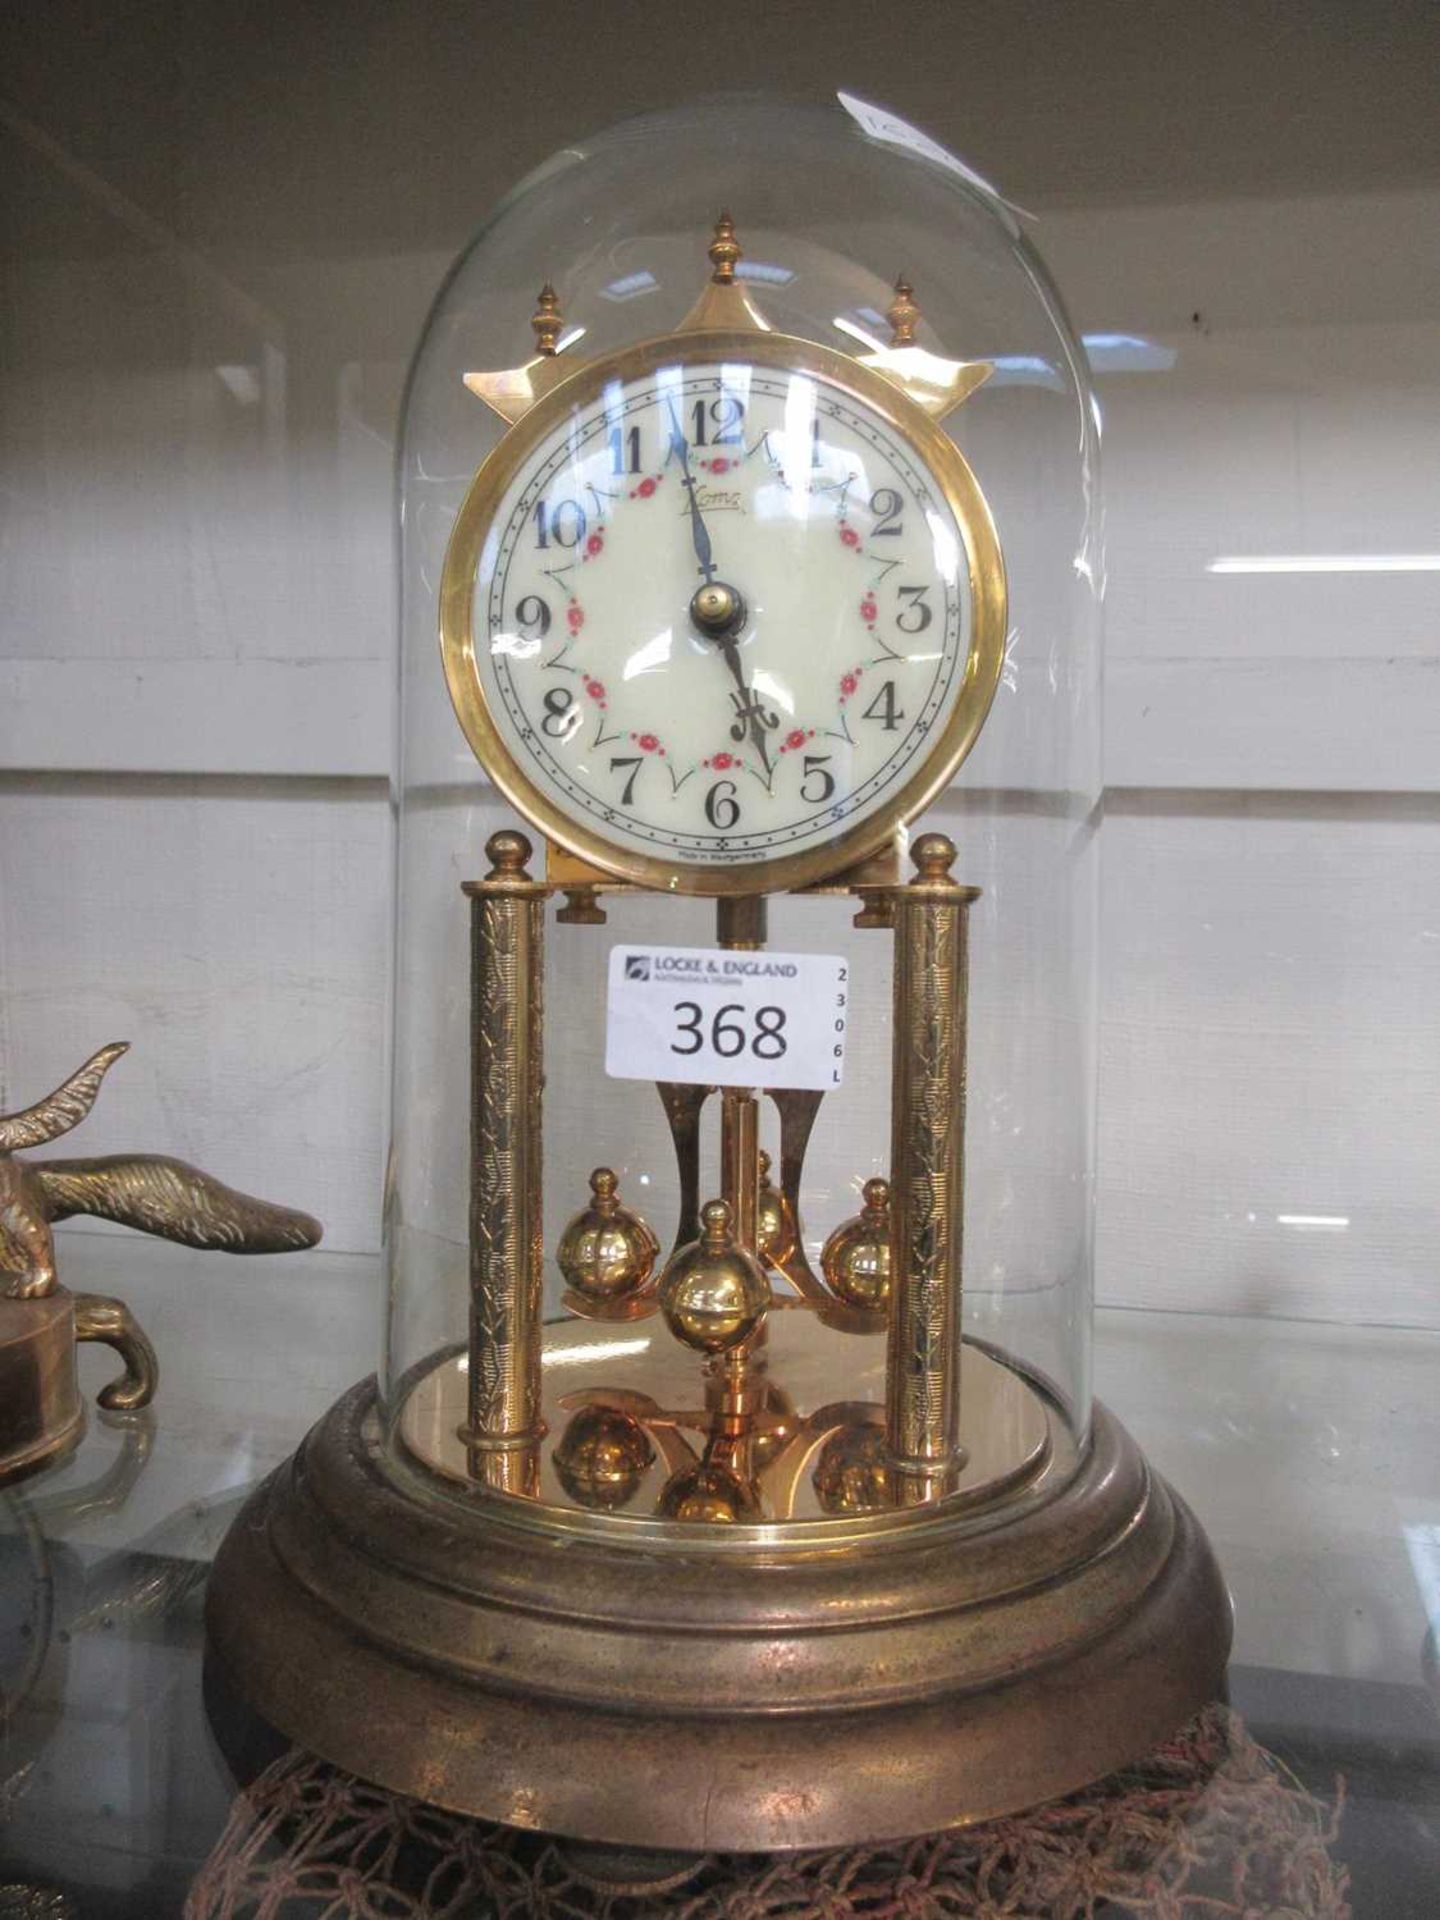 A glass cased anniversary clock